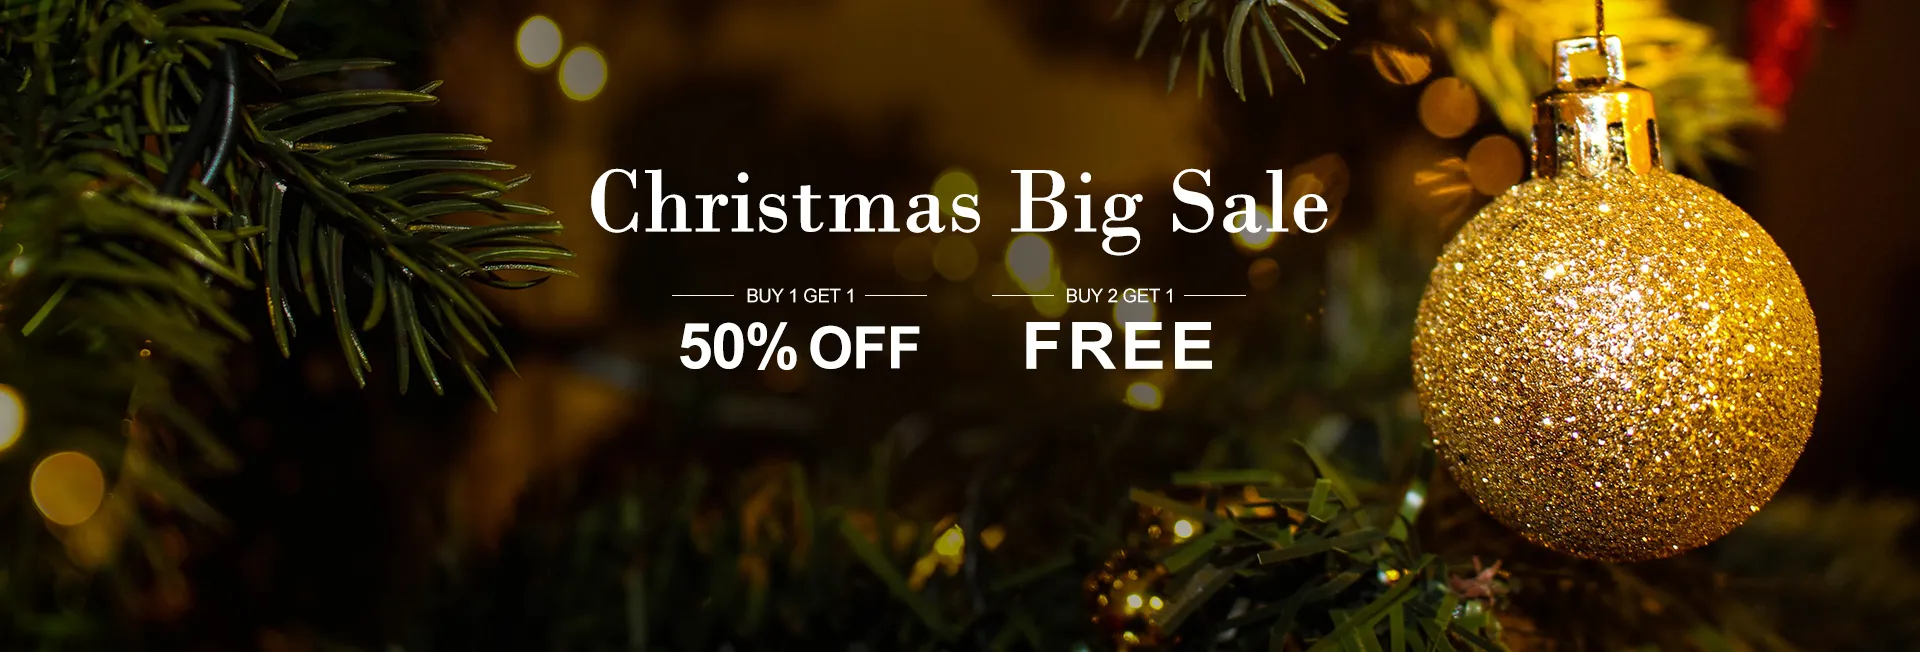 Christmas jewelry big sale buy 1 get 1 50% off buy 2 get 1 free.